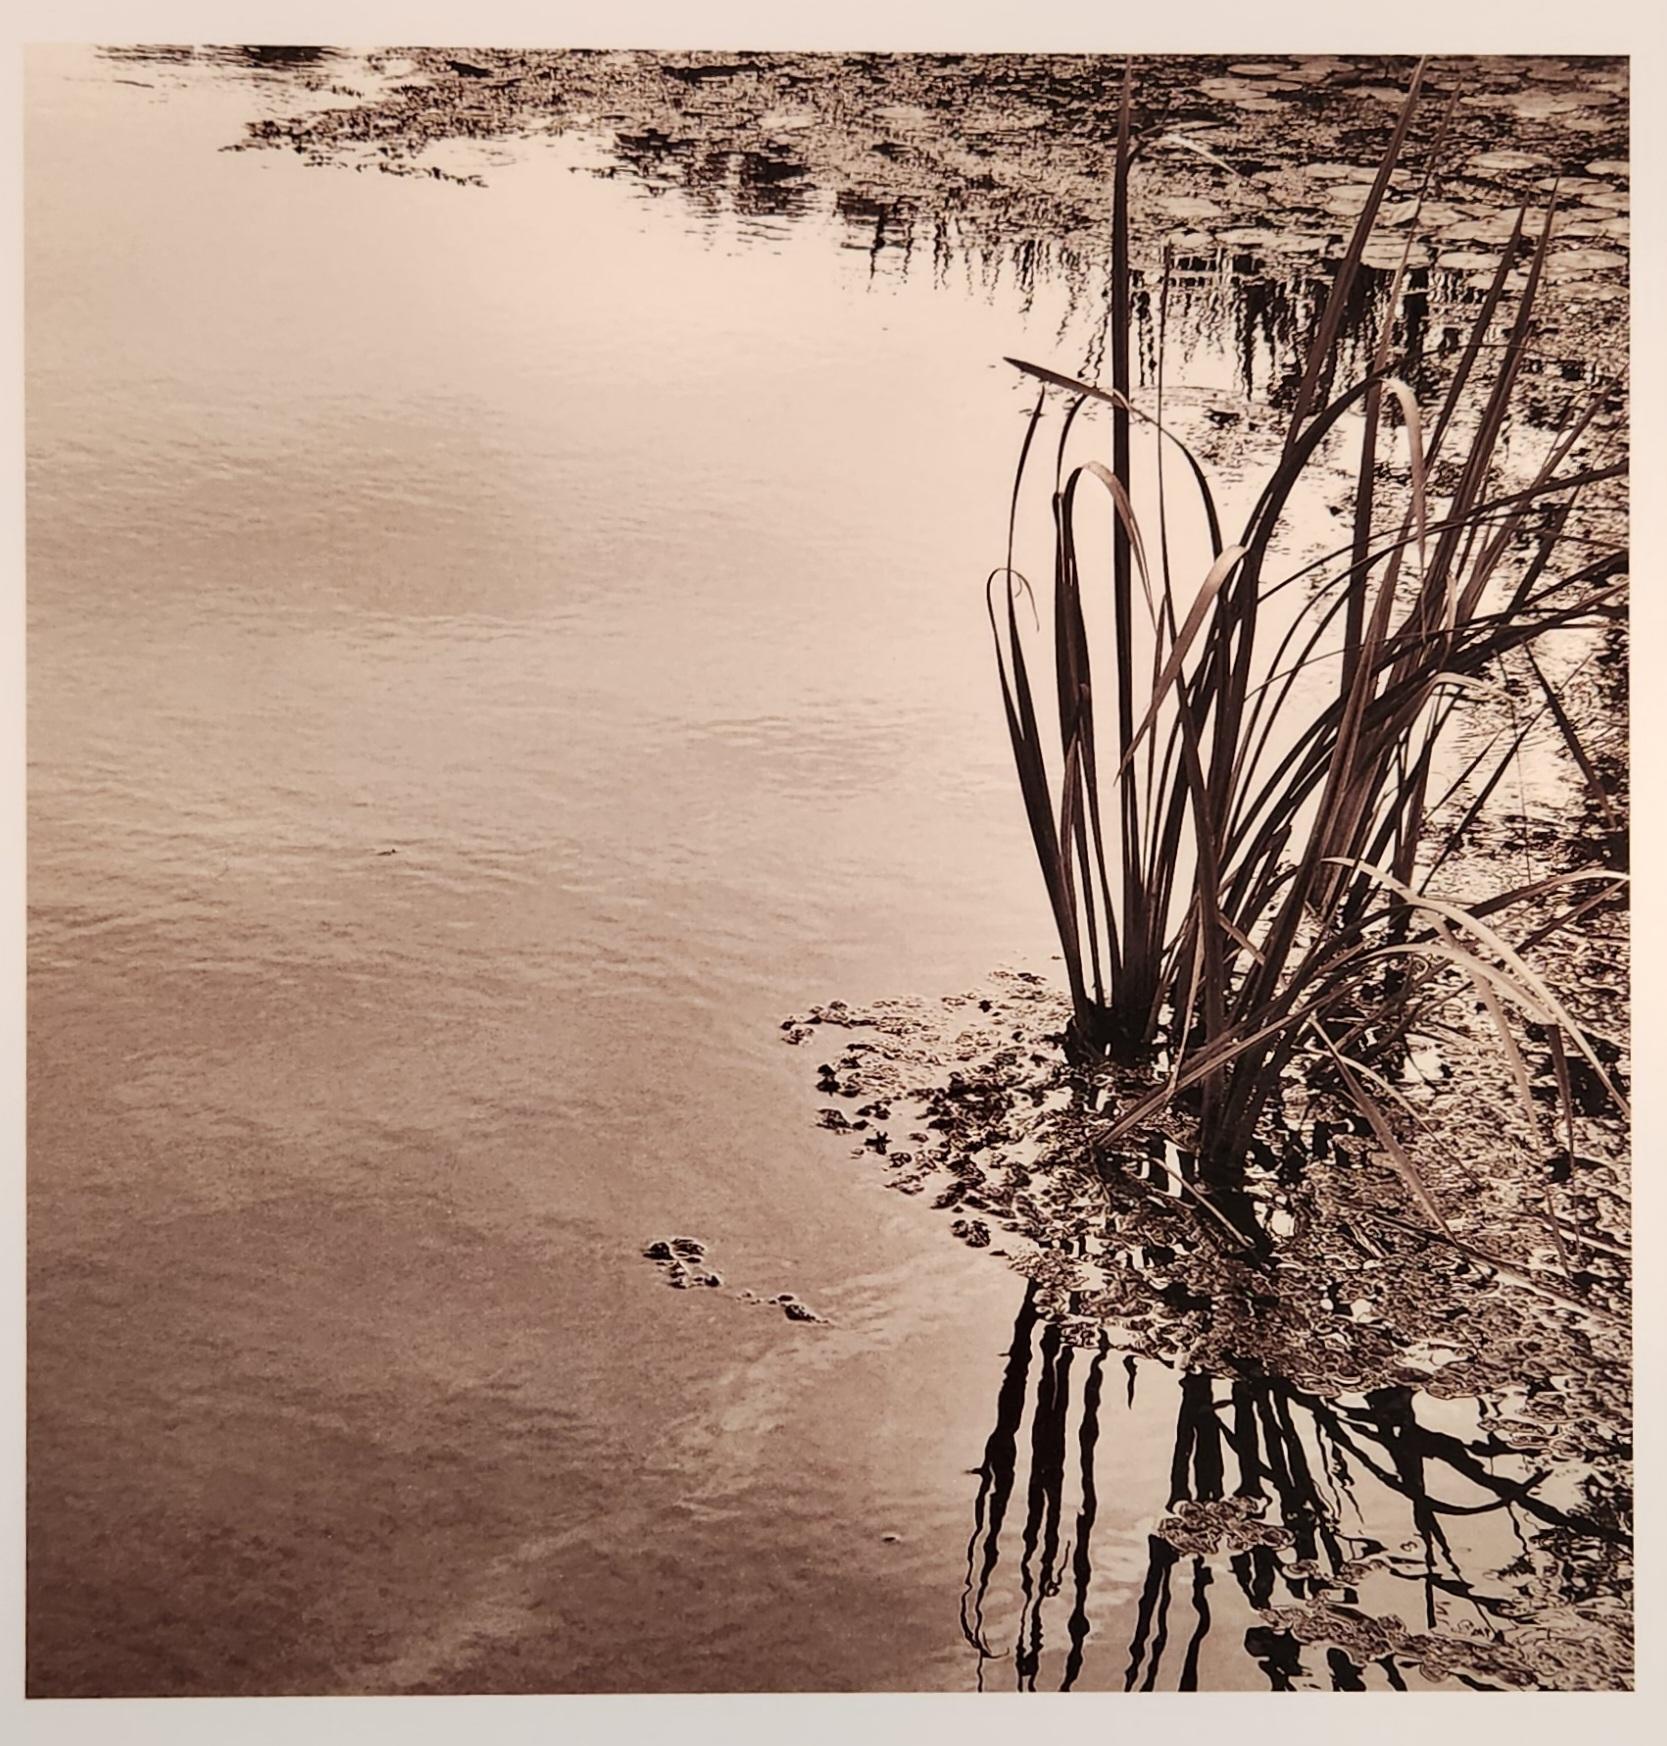 Ann Lee Pond 1 - Photograph by Jeanne Finley